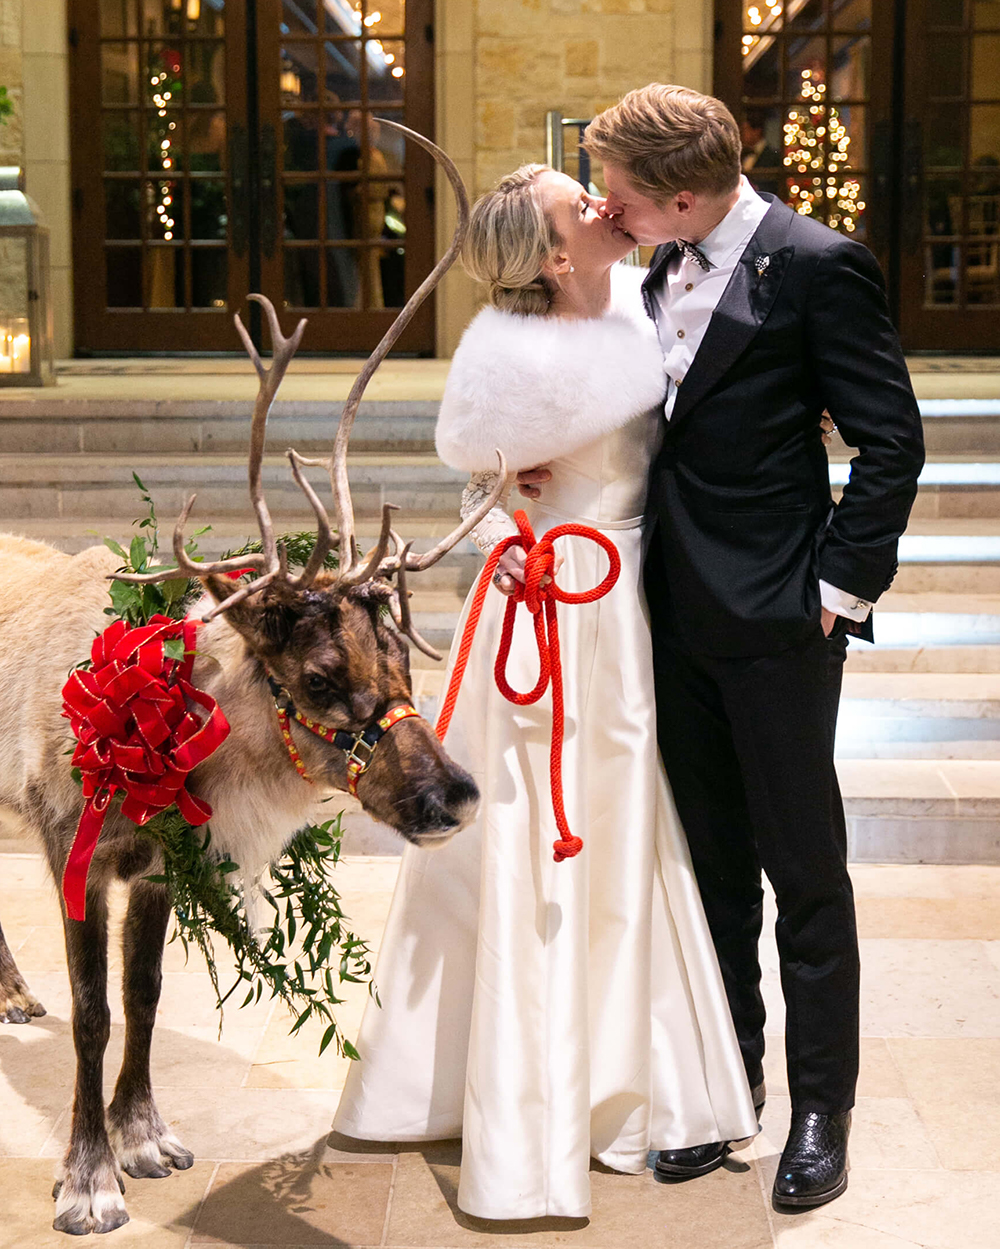 The Most Festive Winter Wedding Celebrations